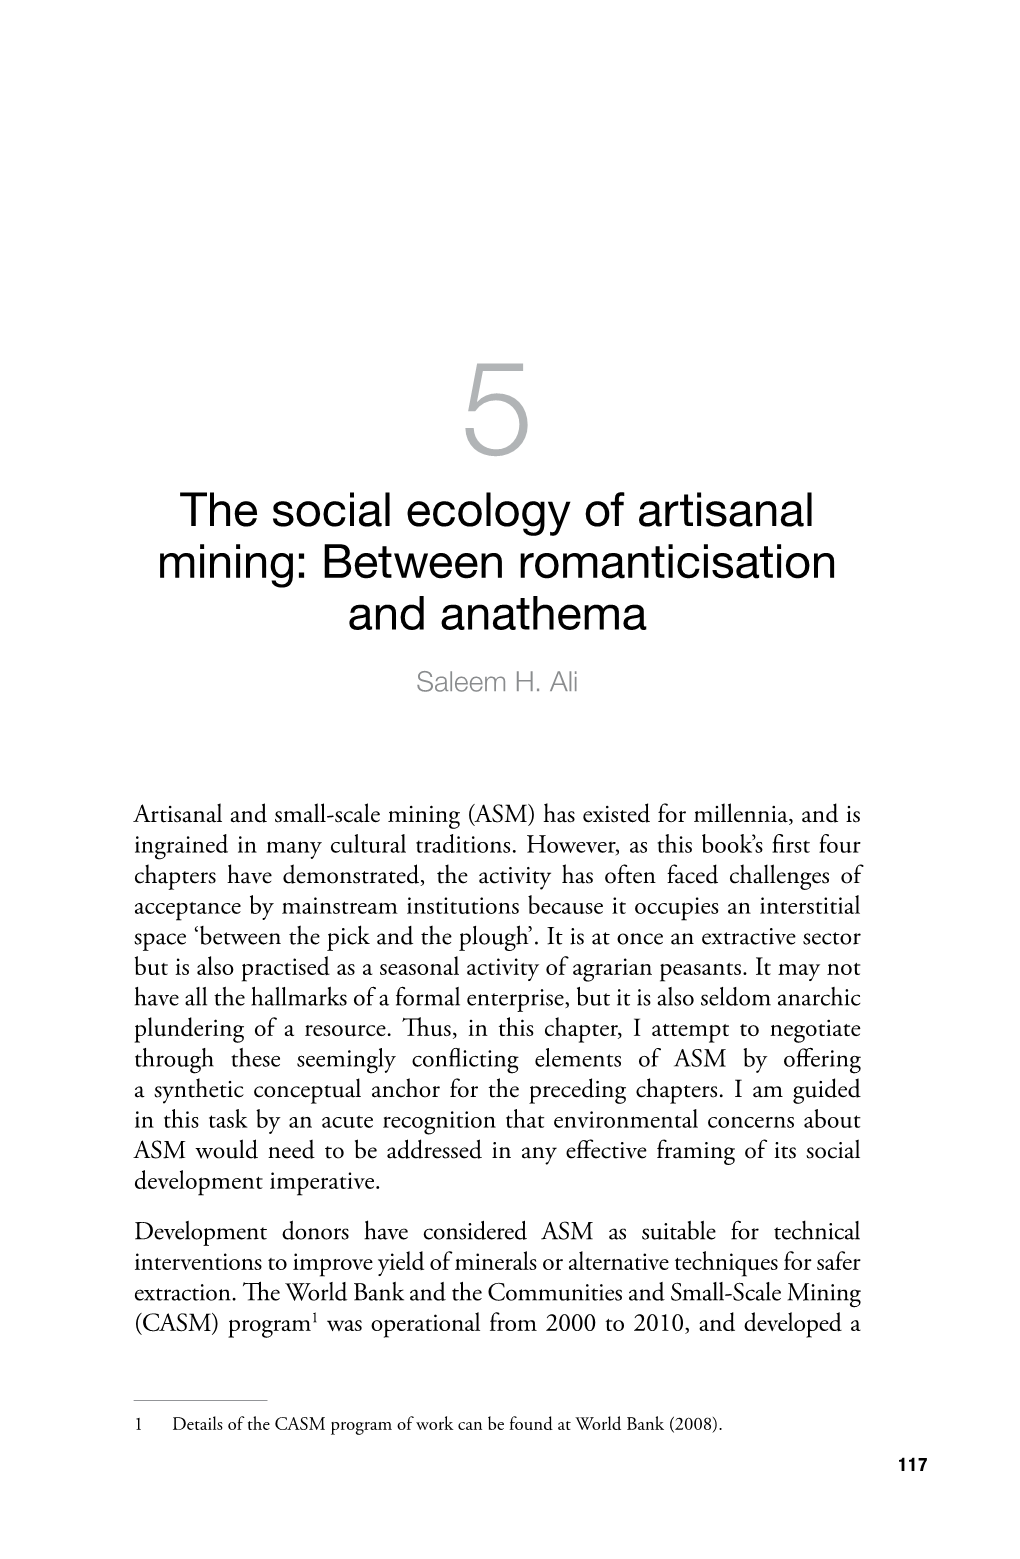 The Social Ecology of Artisanal Mining: Between Romanticisation and Anathema Saleem H